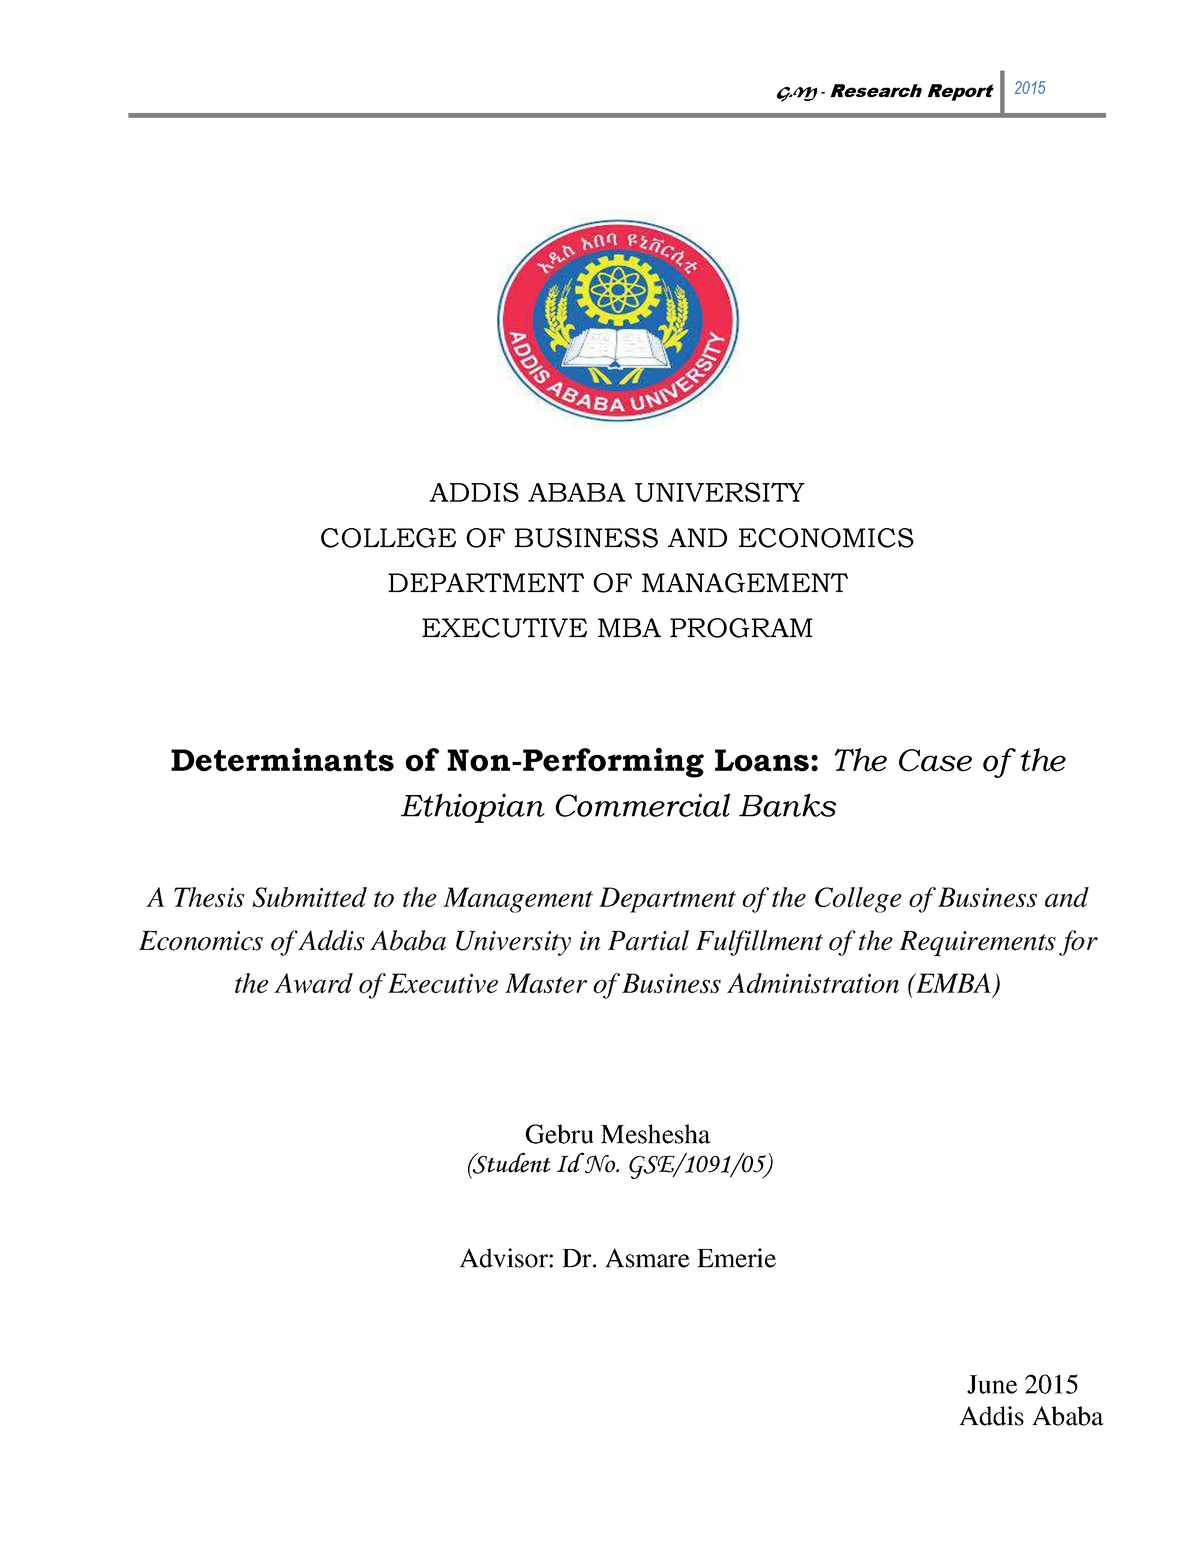 thesis of addis ababa university